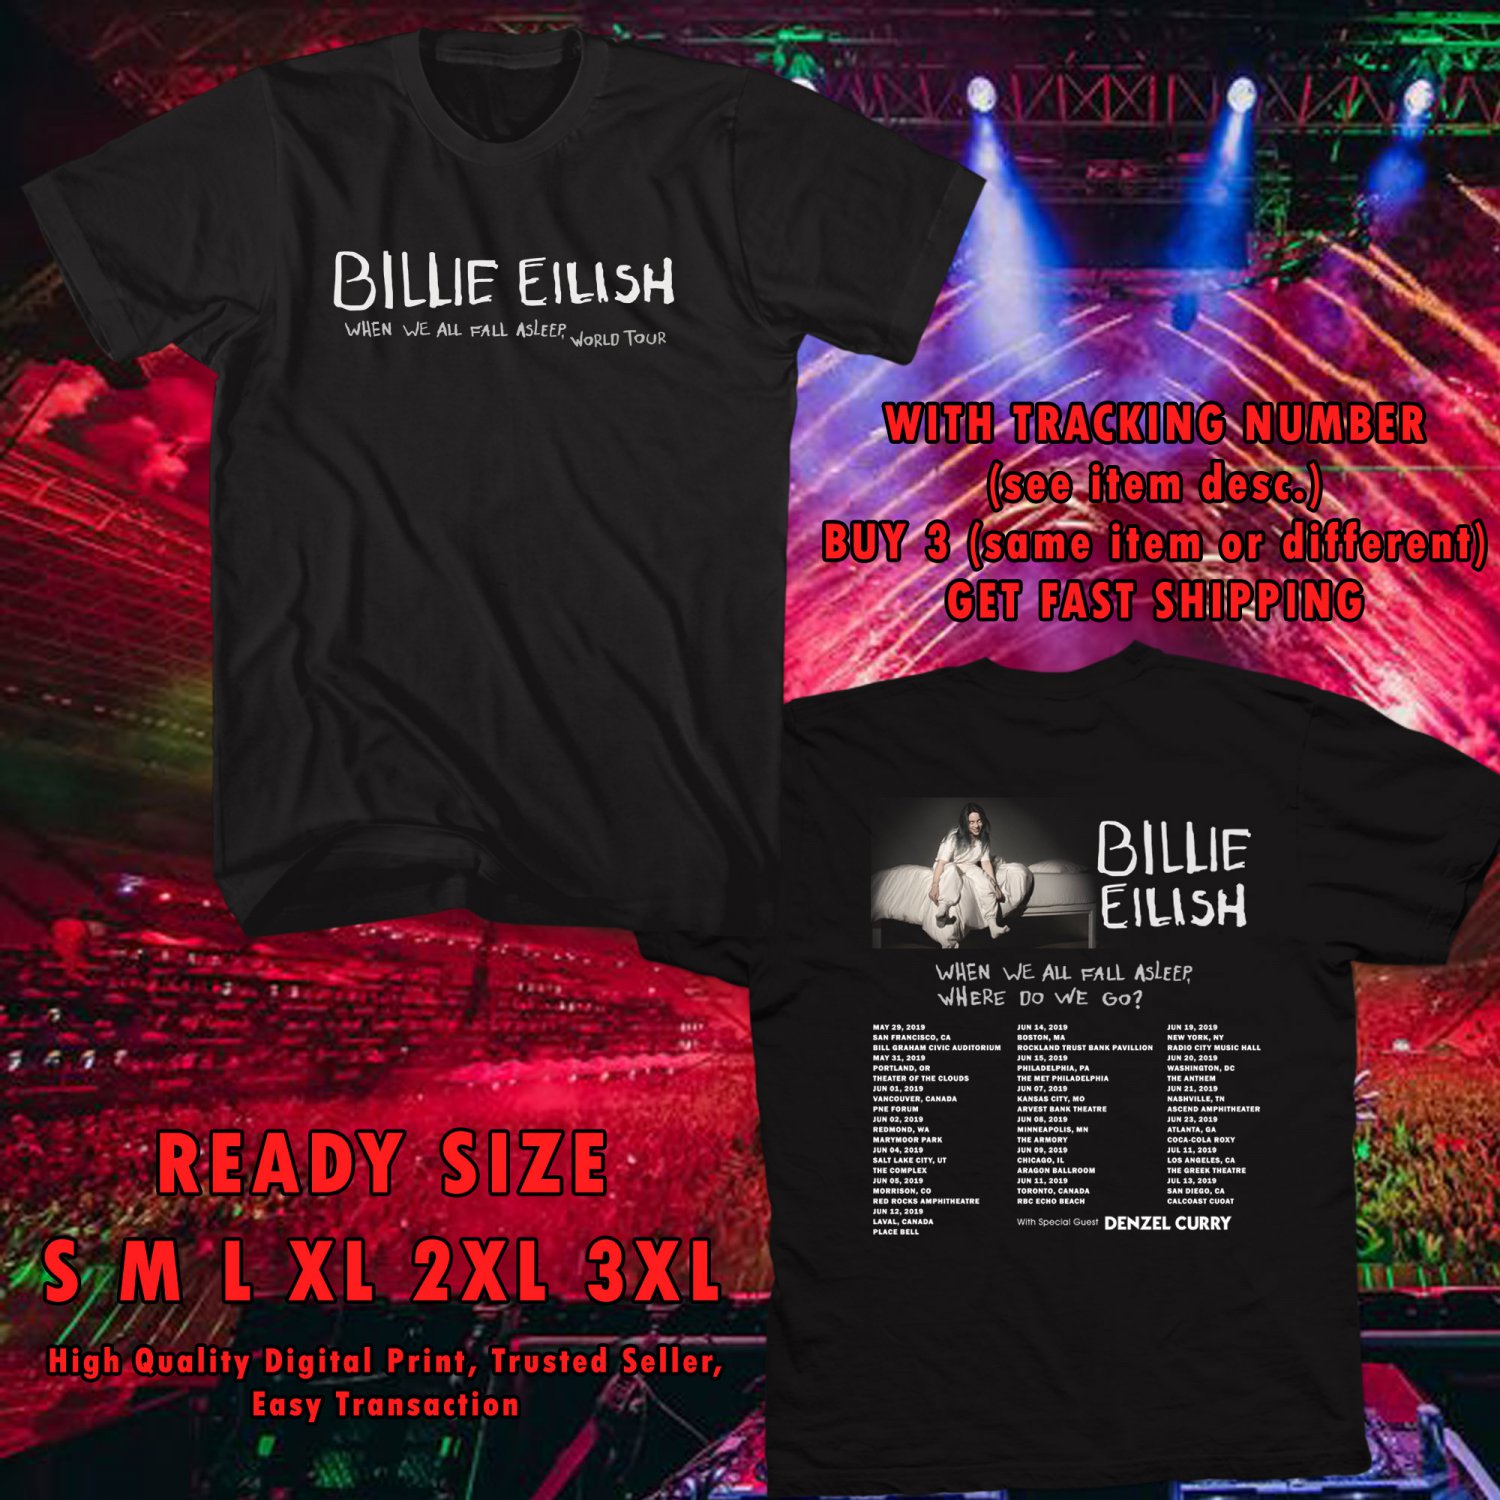 Get This Billie Eilish When We All Fall Asleep Tour 2019 Black Tee Andalid31500 x 1500